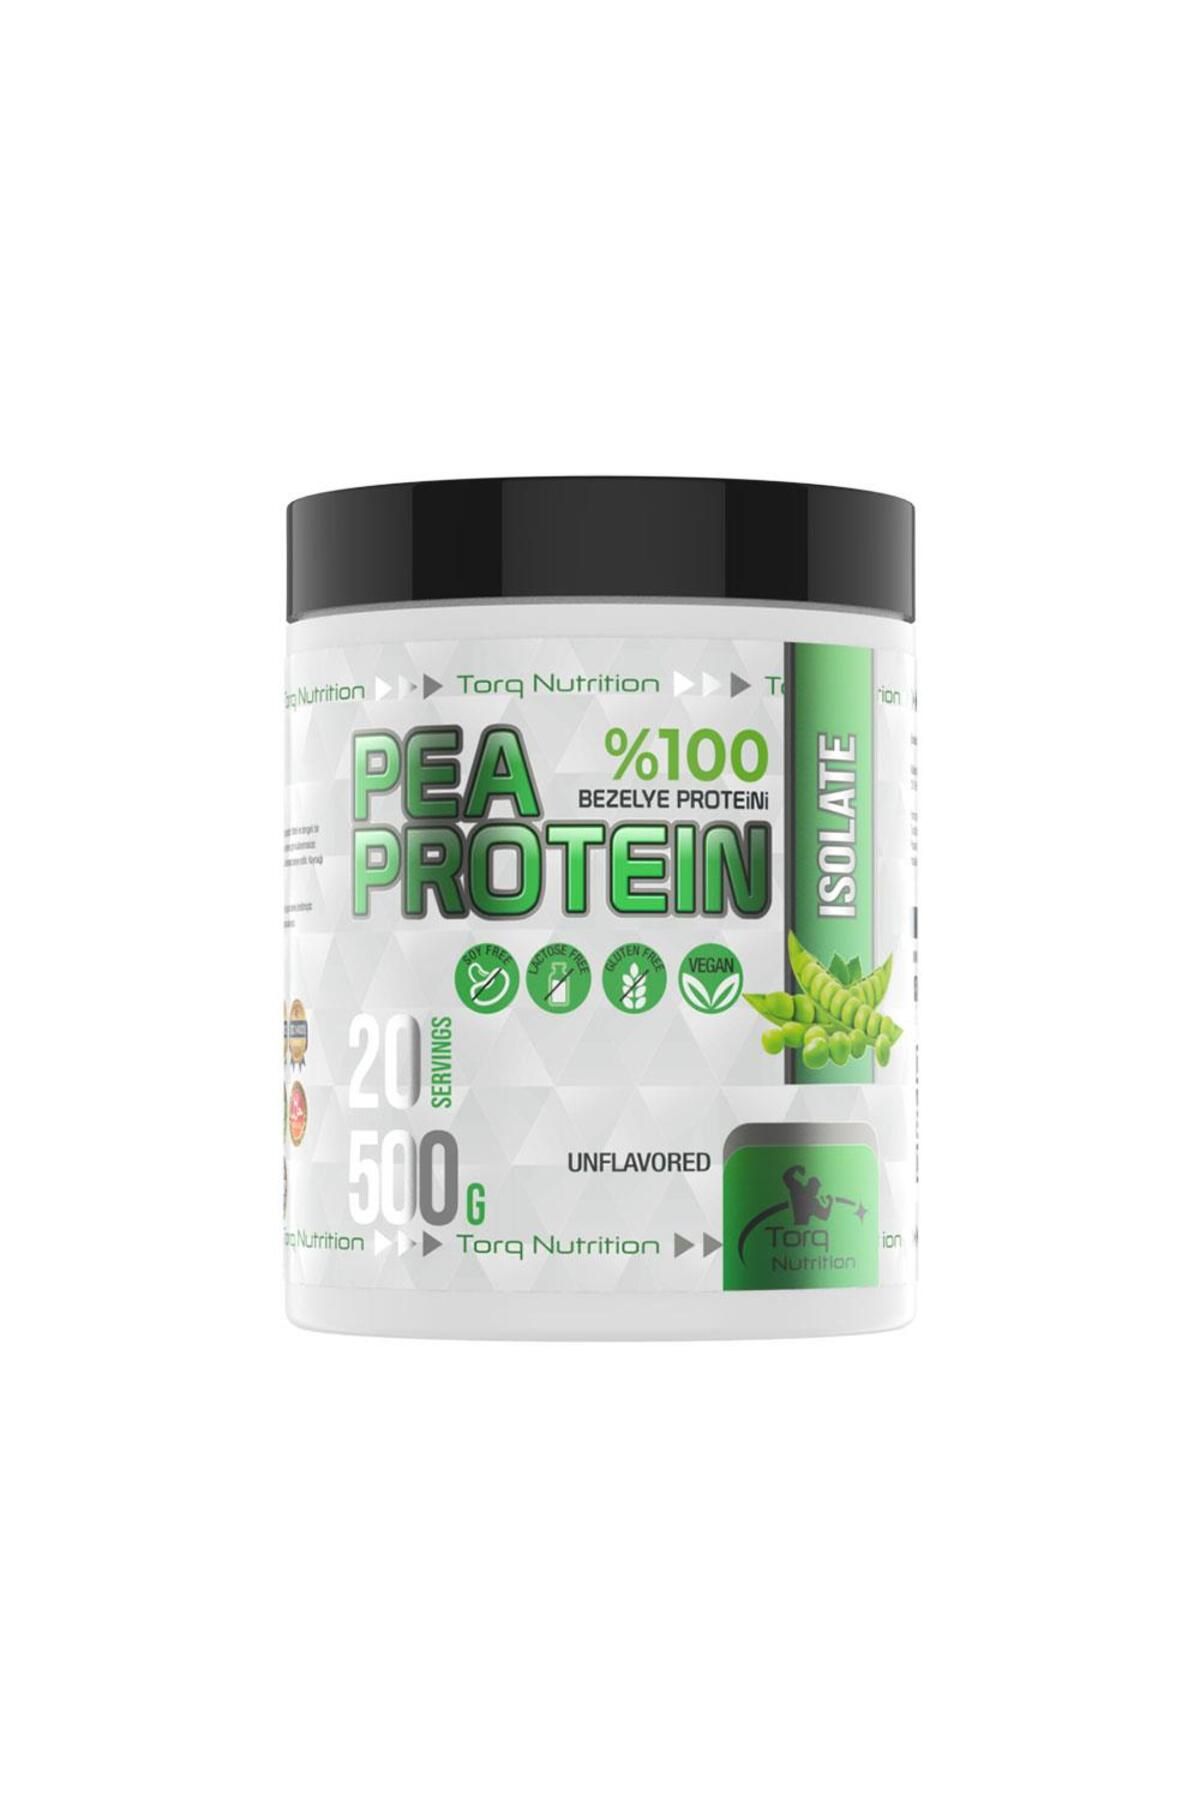 Torq Nutrition Pea Protein %100 Bezelye Proteini 500 gr - Aromasız